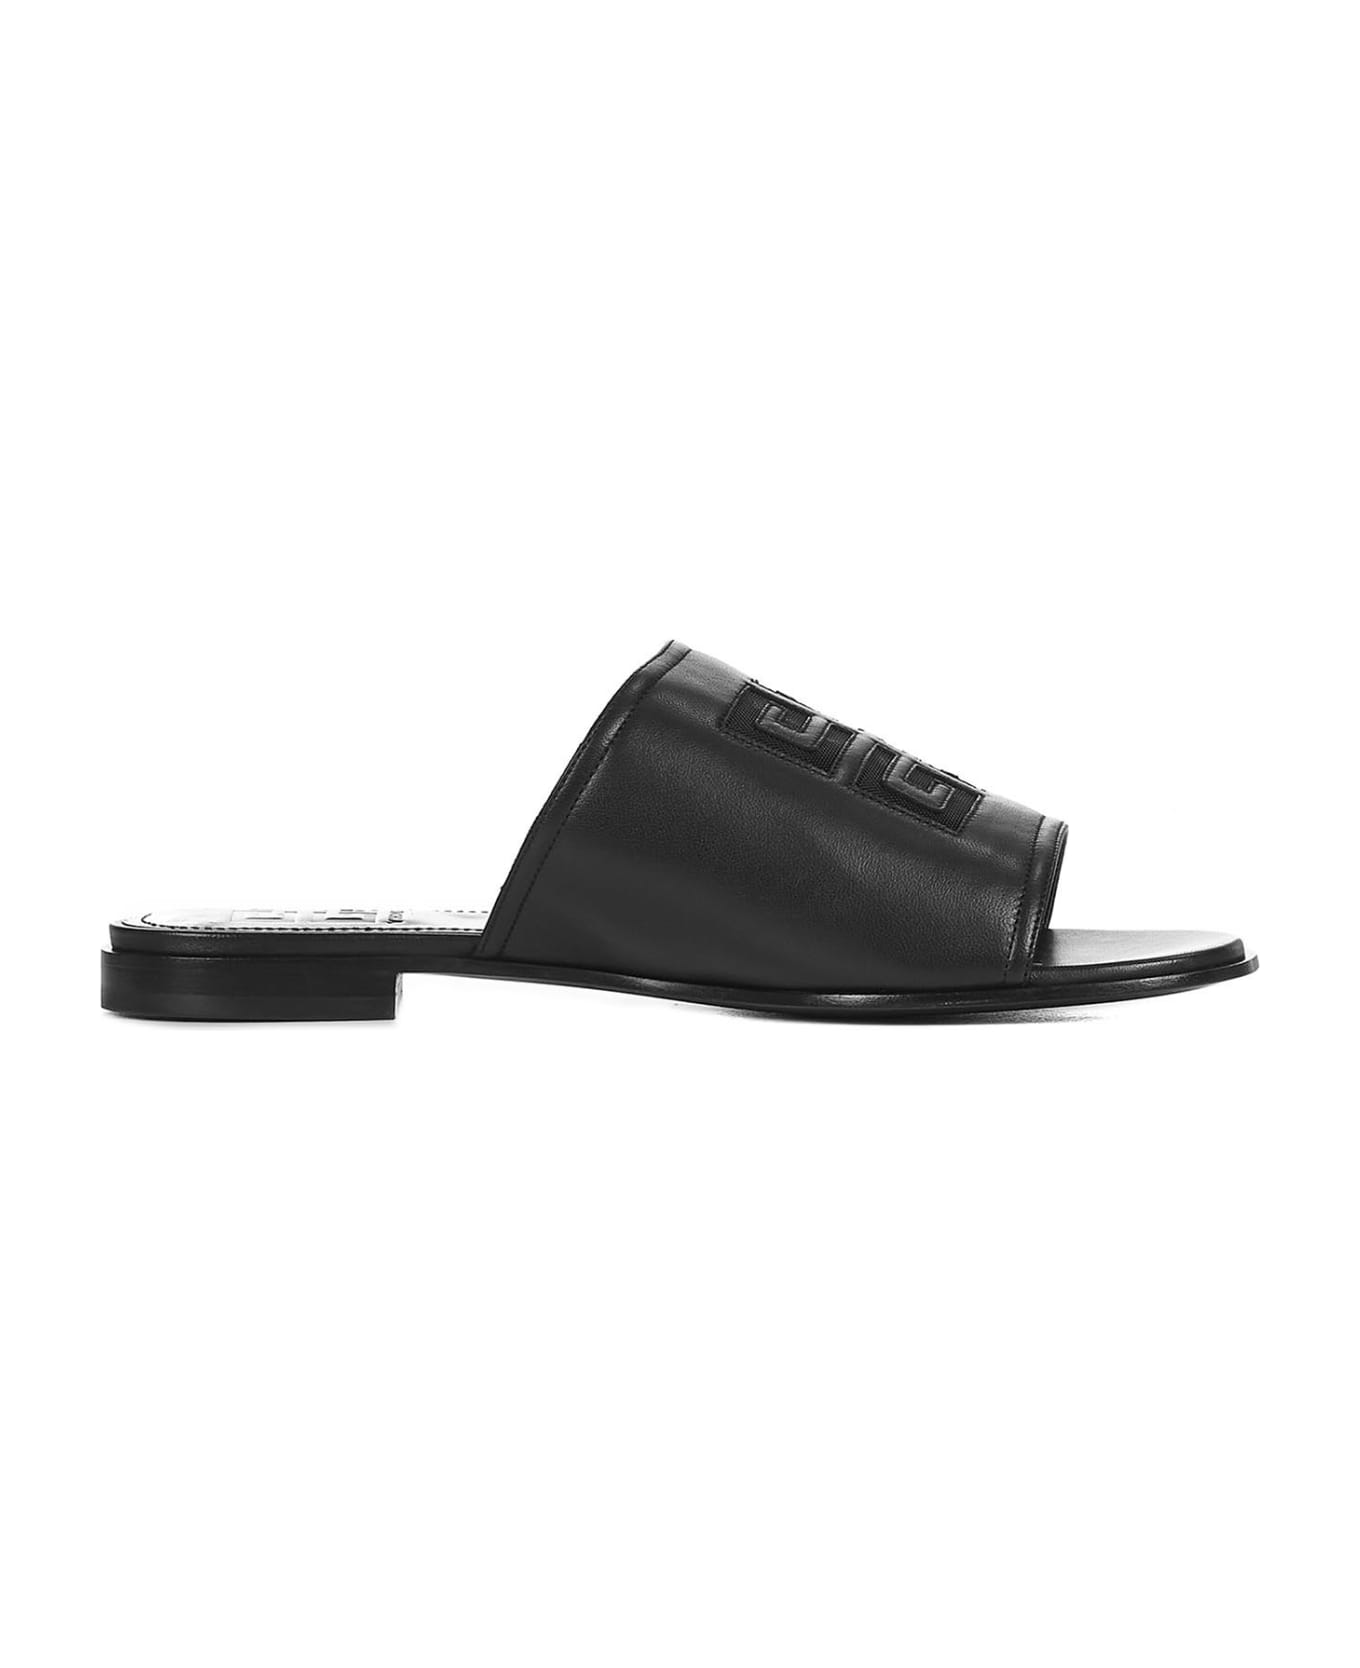 Givenchy Nappa Leather 4g Slippers - Black サンダル